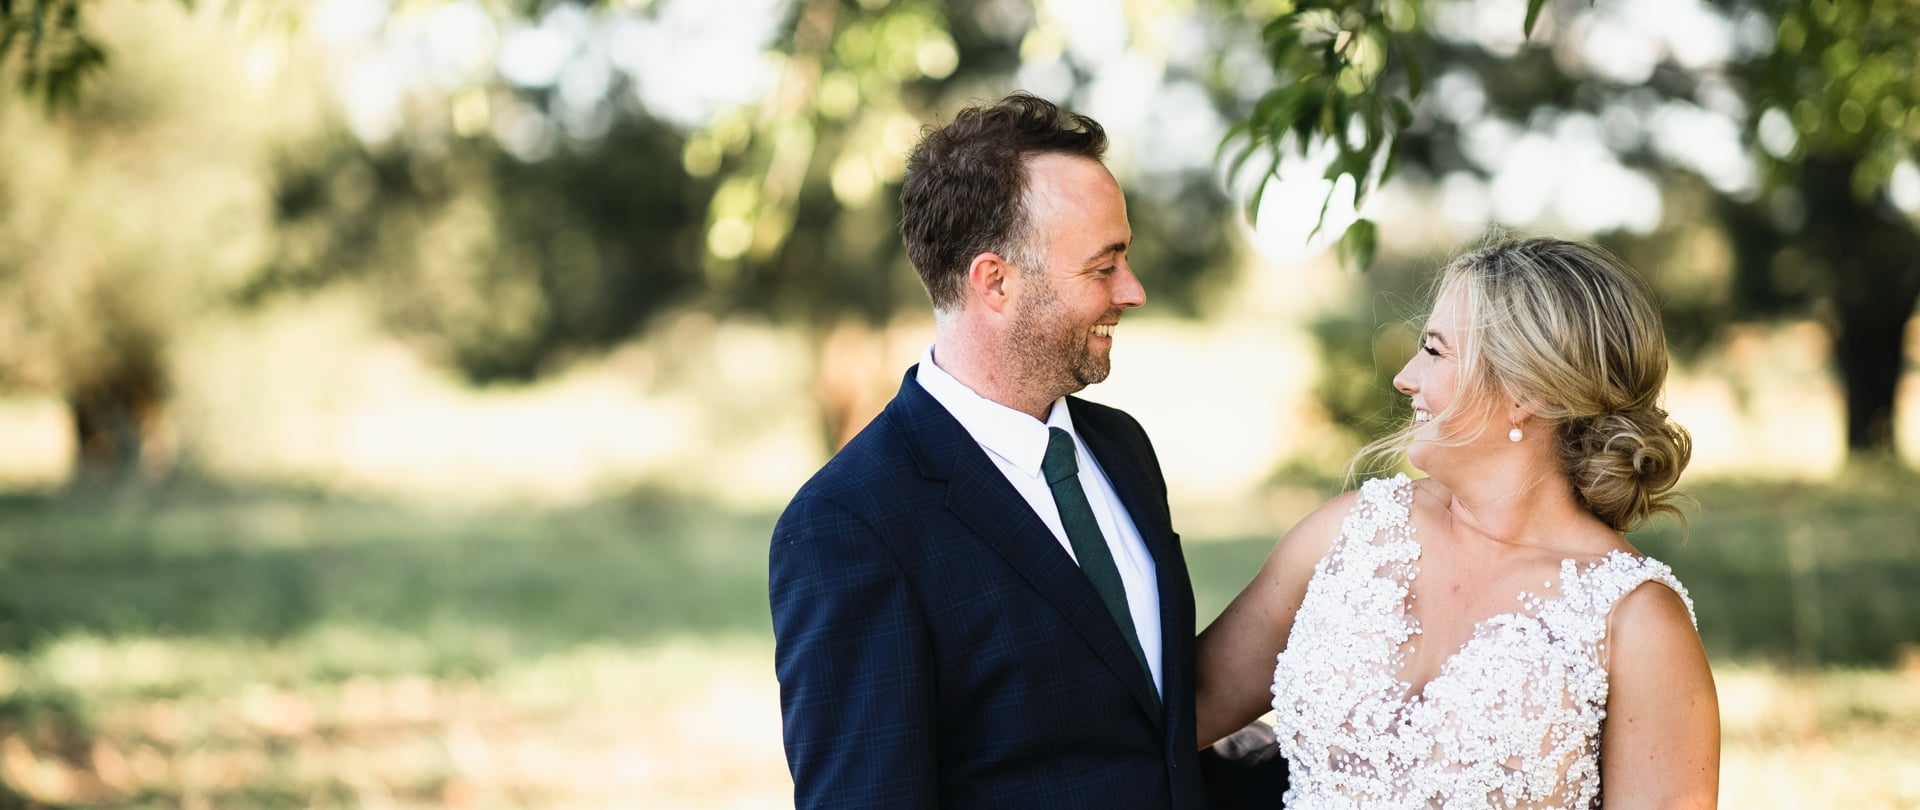 Caroline & Ed Wedding Video Filmed atBerry,New South Wales